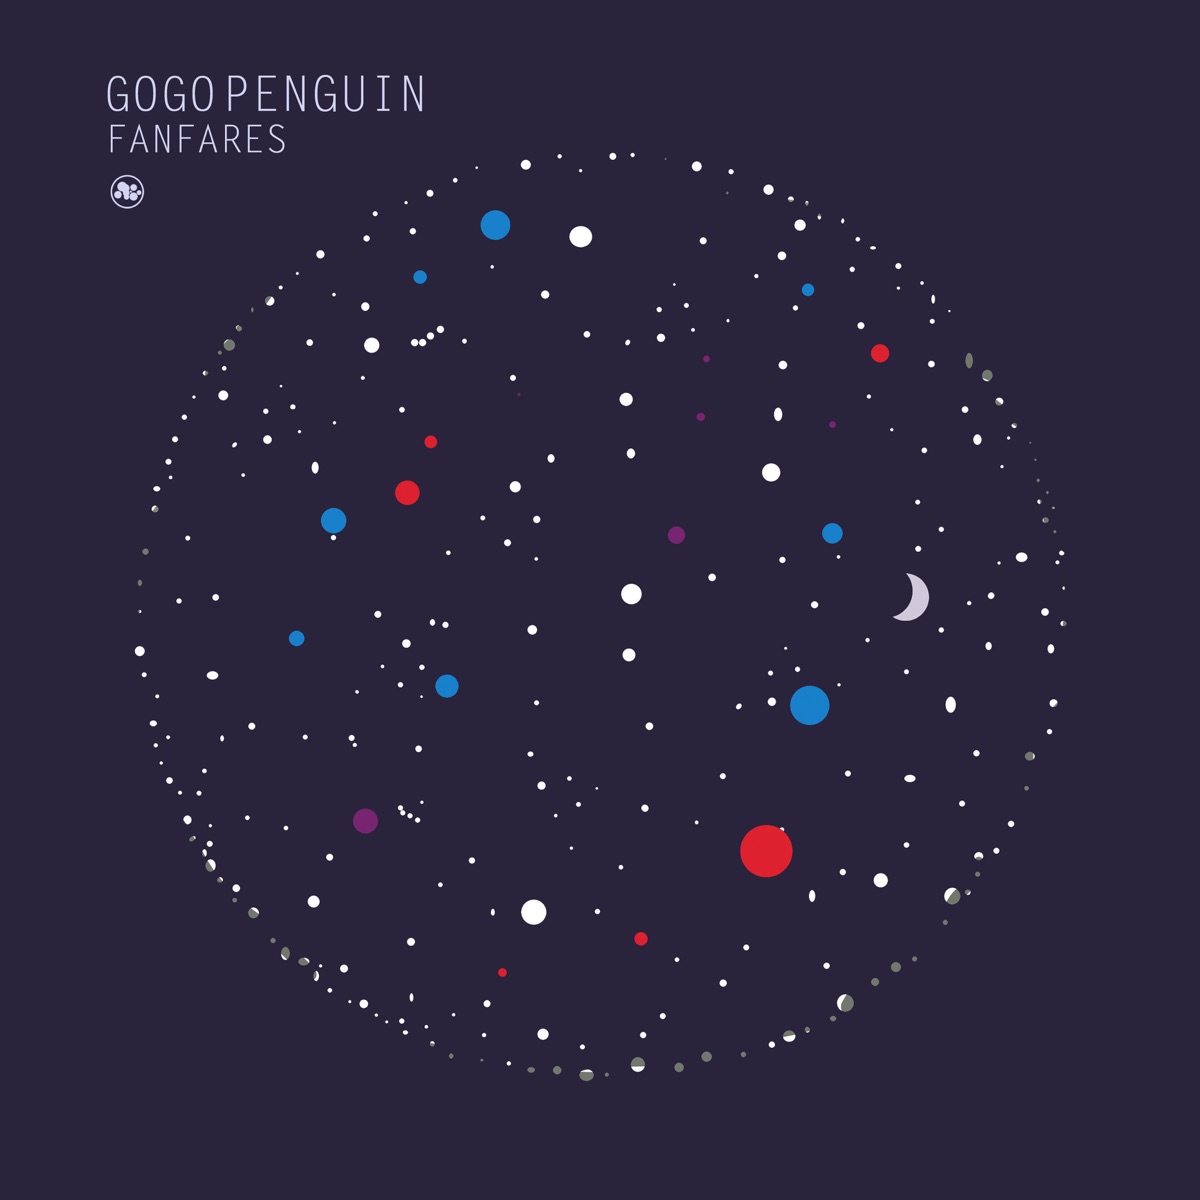 Gogo Gospel - Album by Norlins - Apple Music